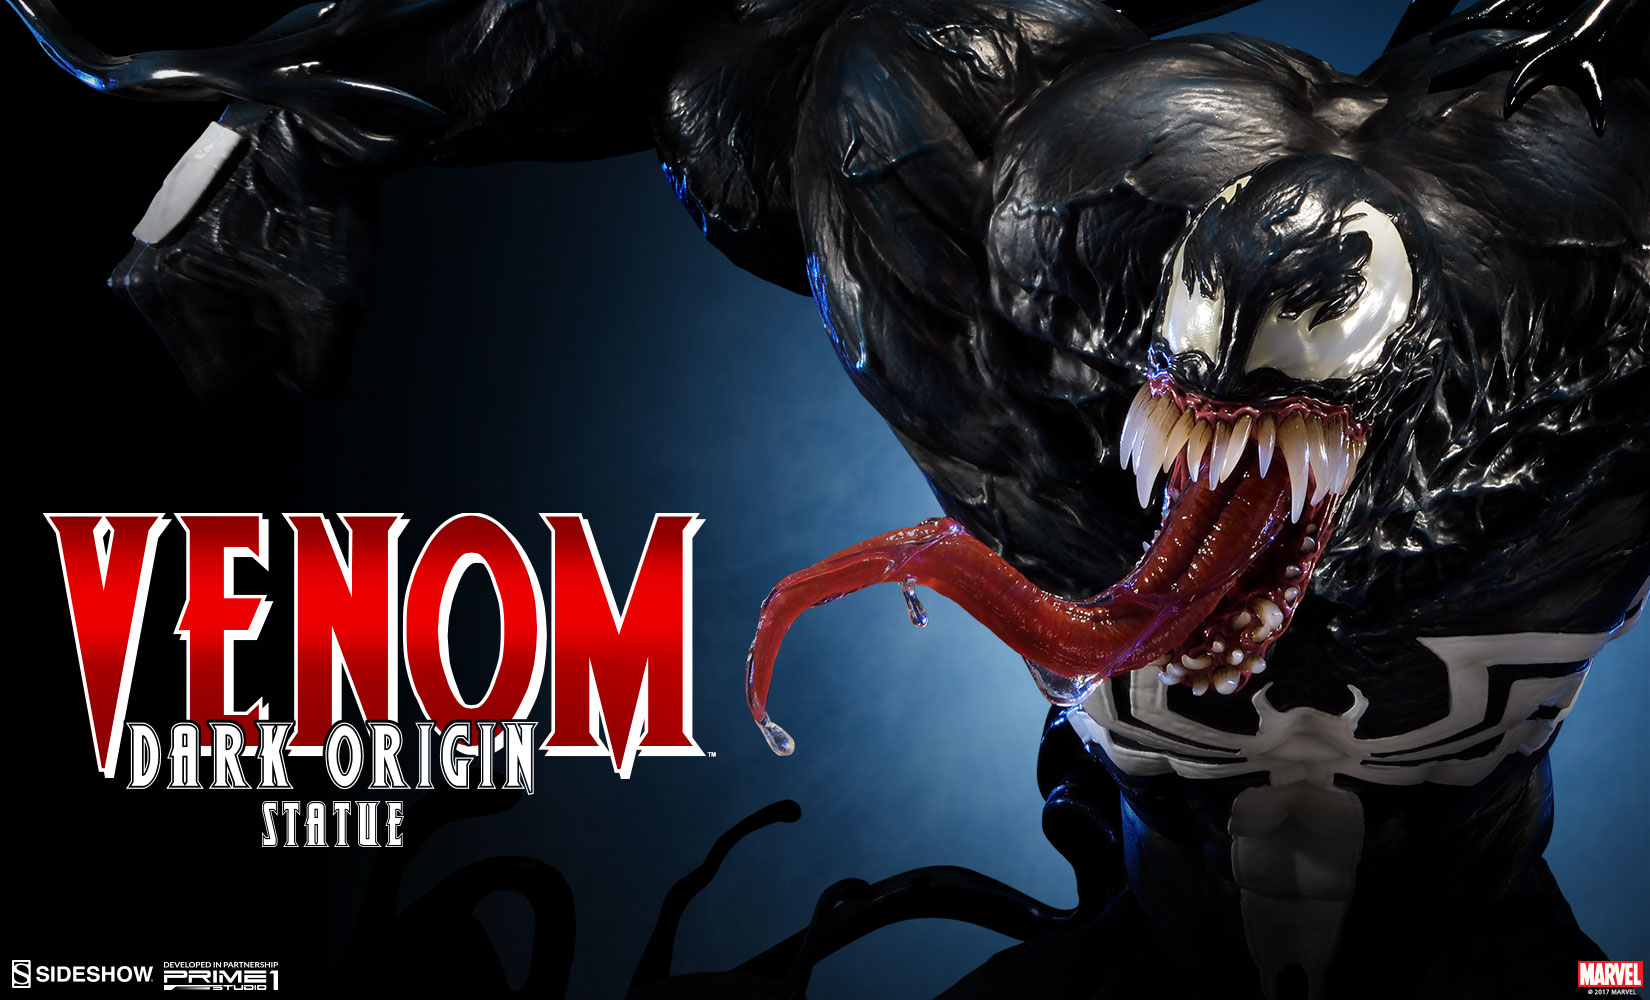 Marvel Venom Pictures 102